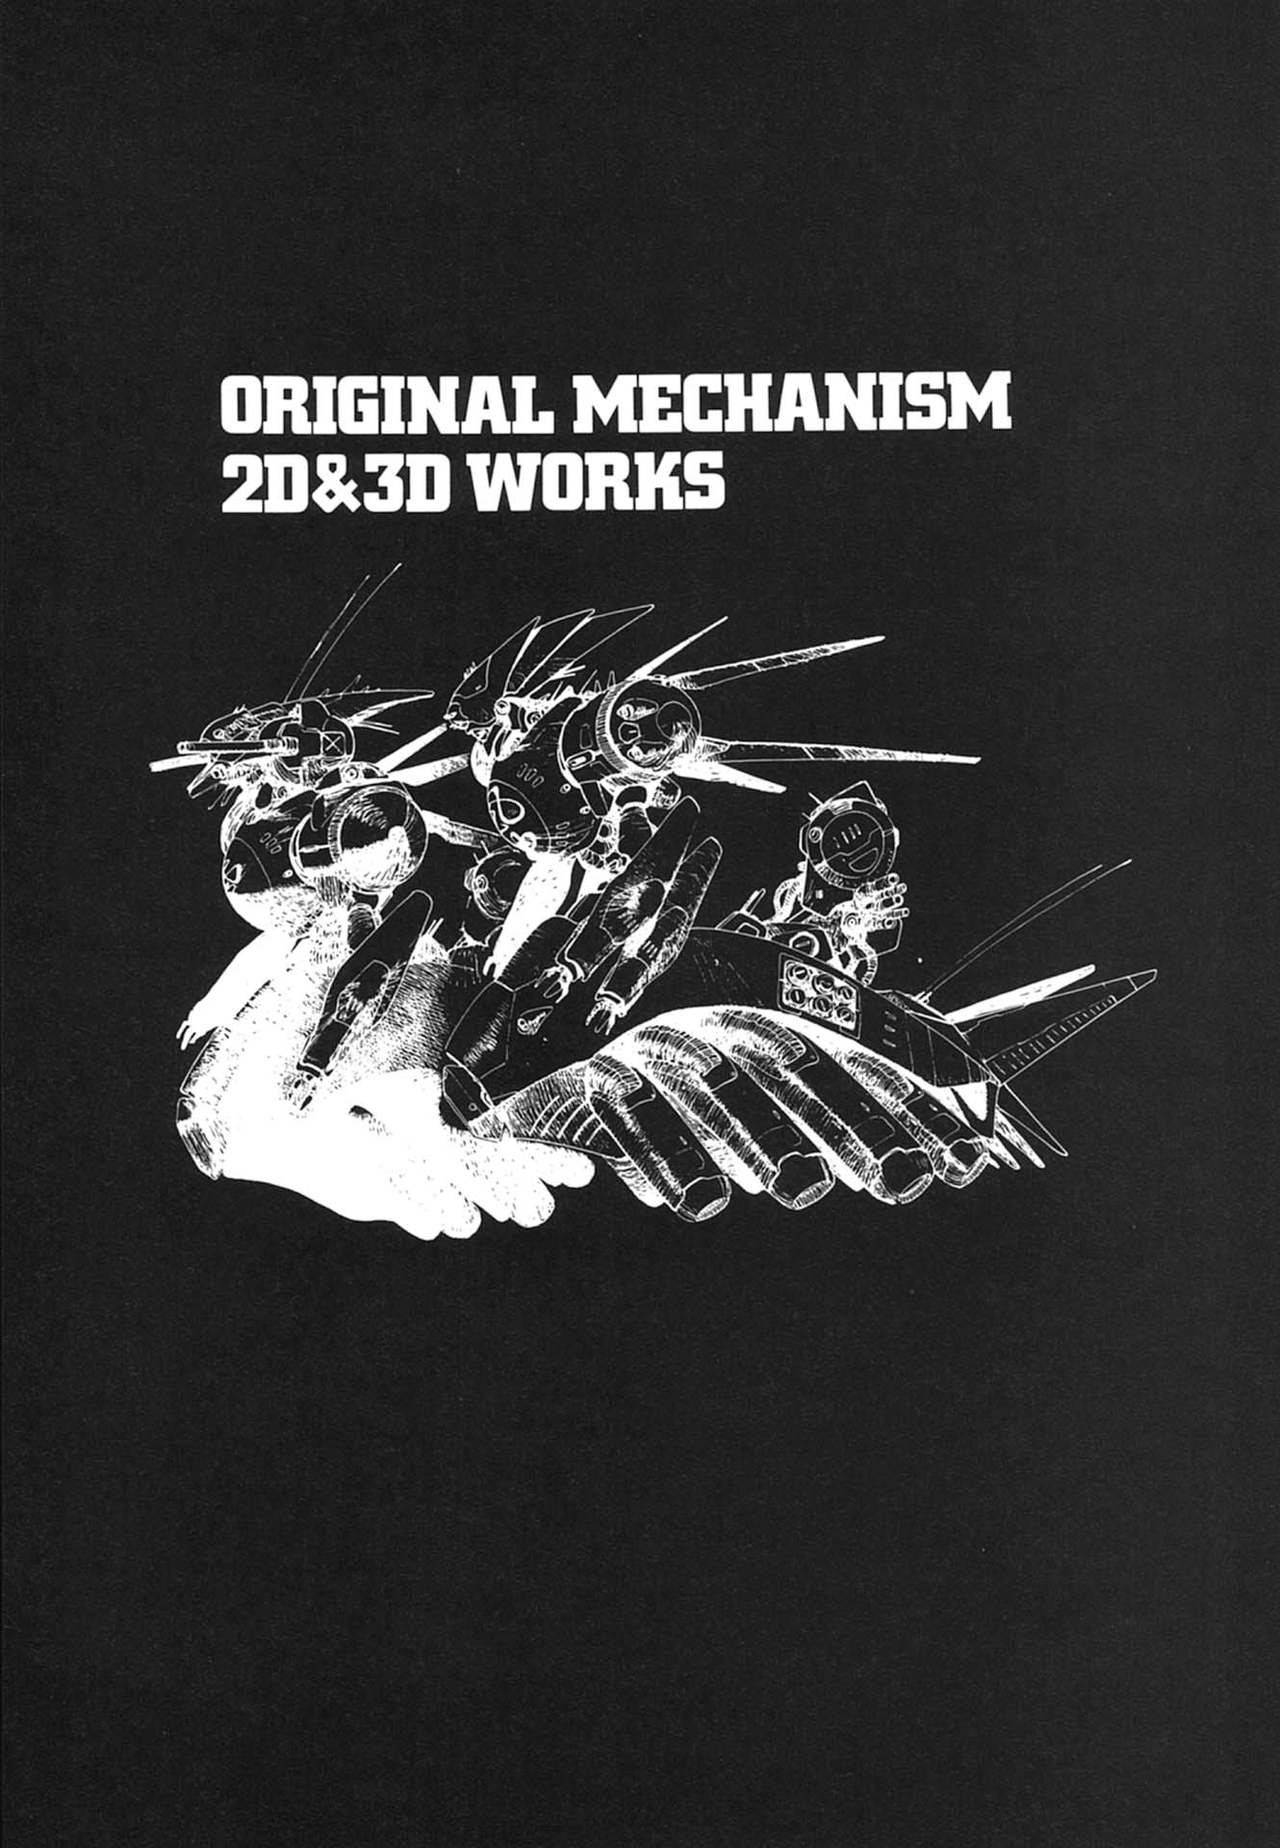 [Kazuhisa Kondo] Kazuhisa Kondo 2D & 3D Works - Go Ahead - From Mobile Suit Gundam to Original Mechanism 82